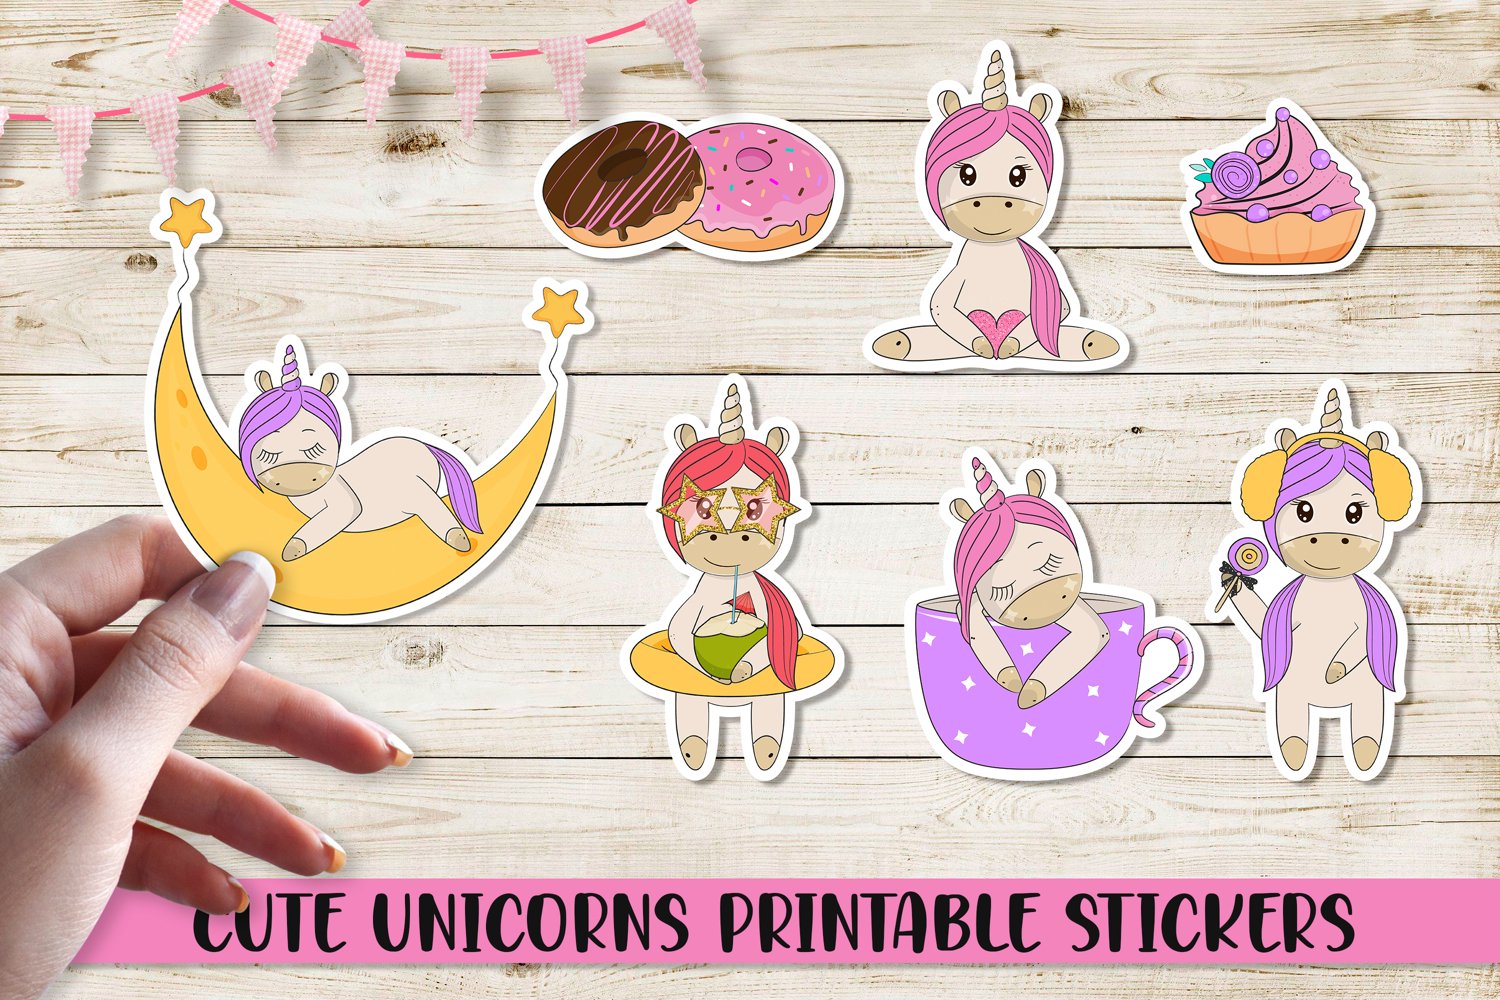 Cute unicorns printable stickers.